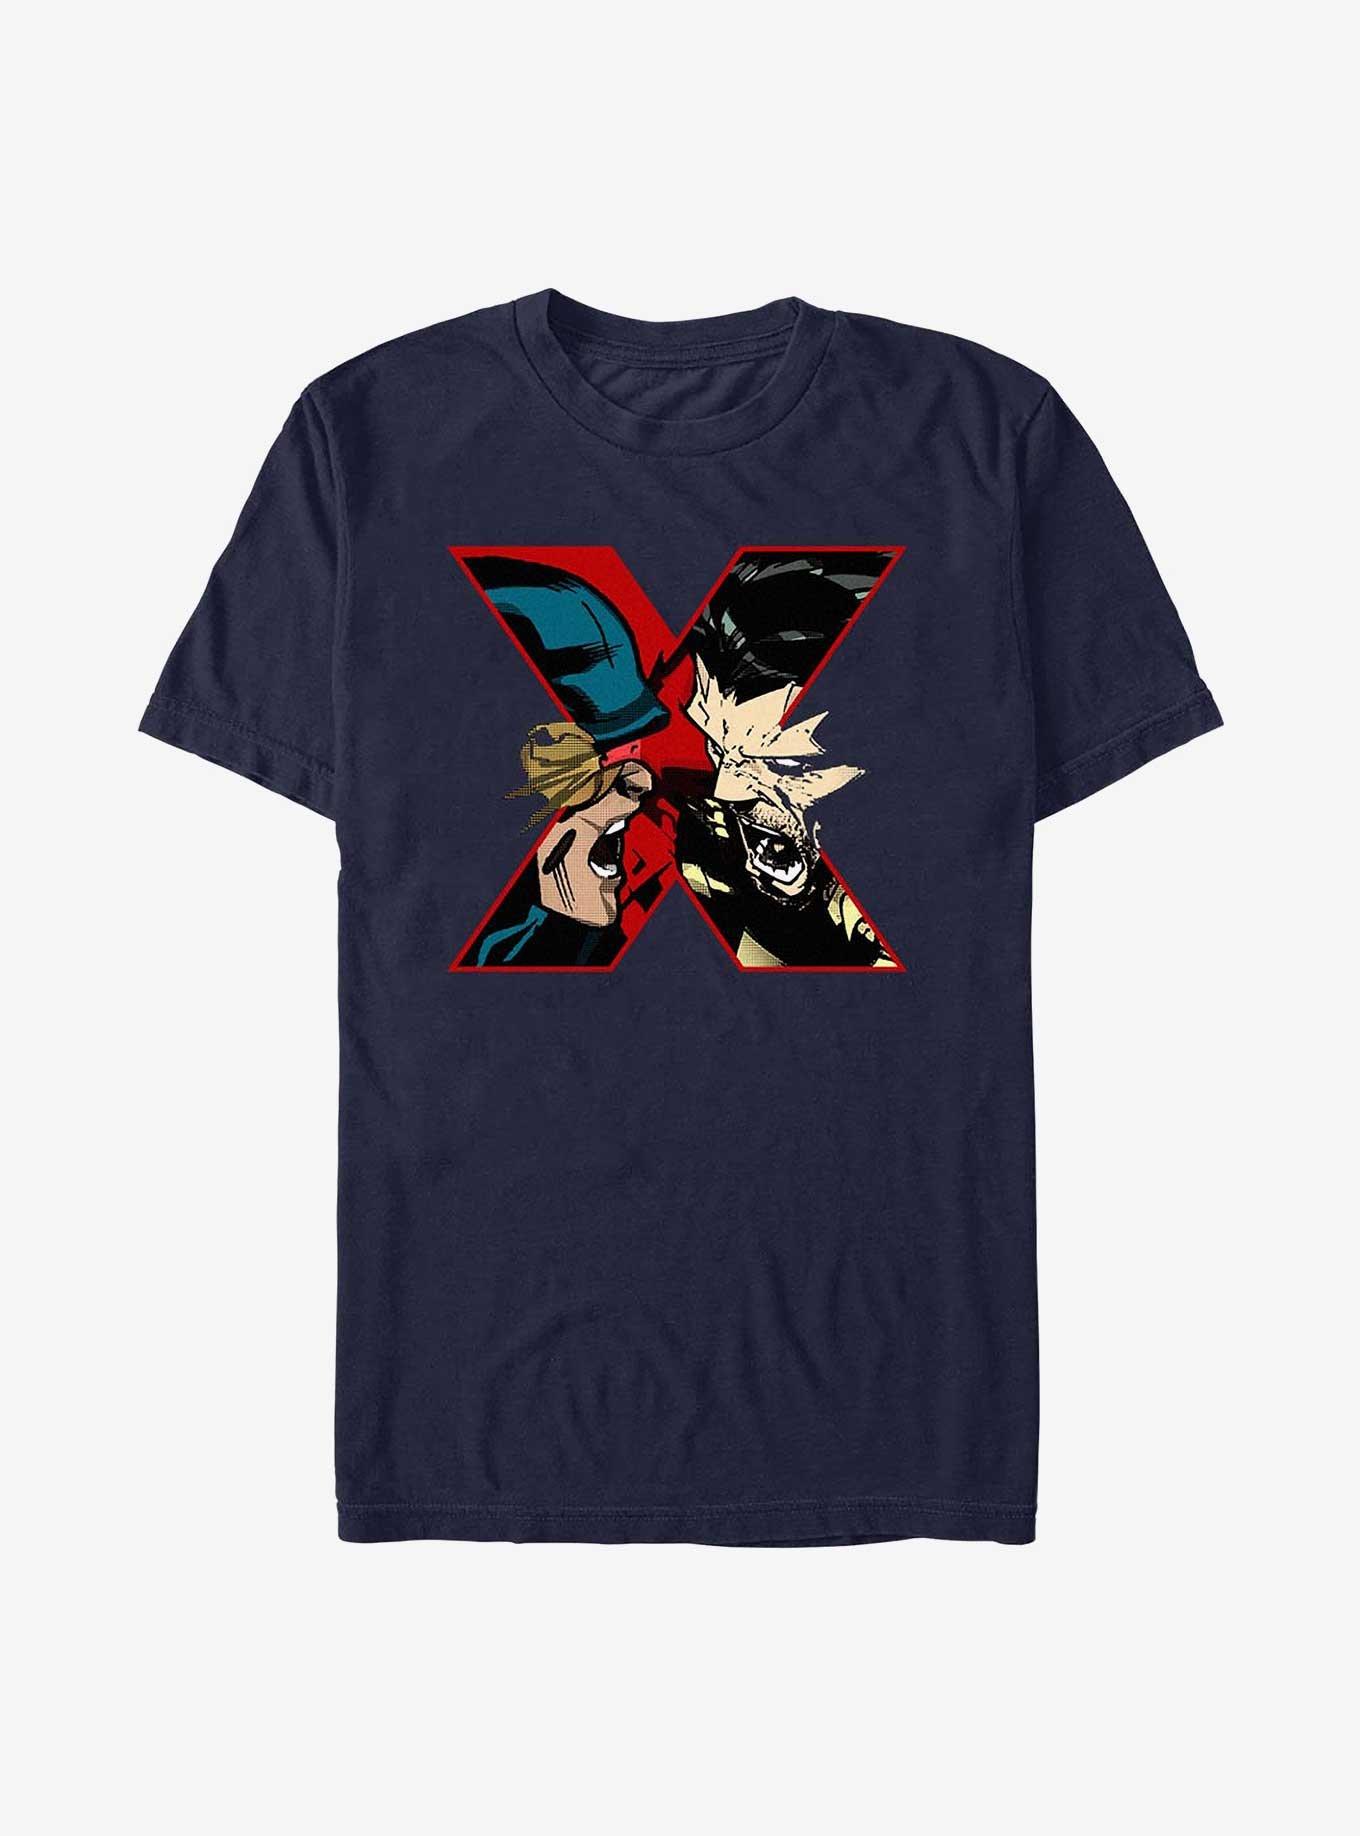 X-Men Cyclops X Wolverine T-Shirt, NAVY, hi-res